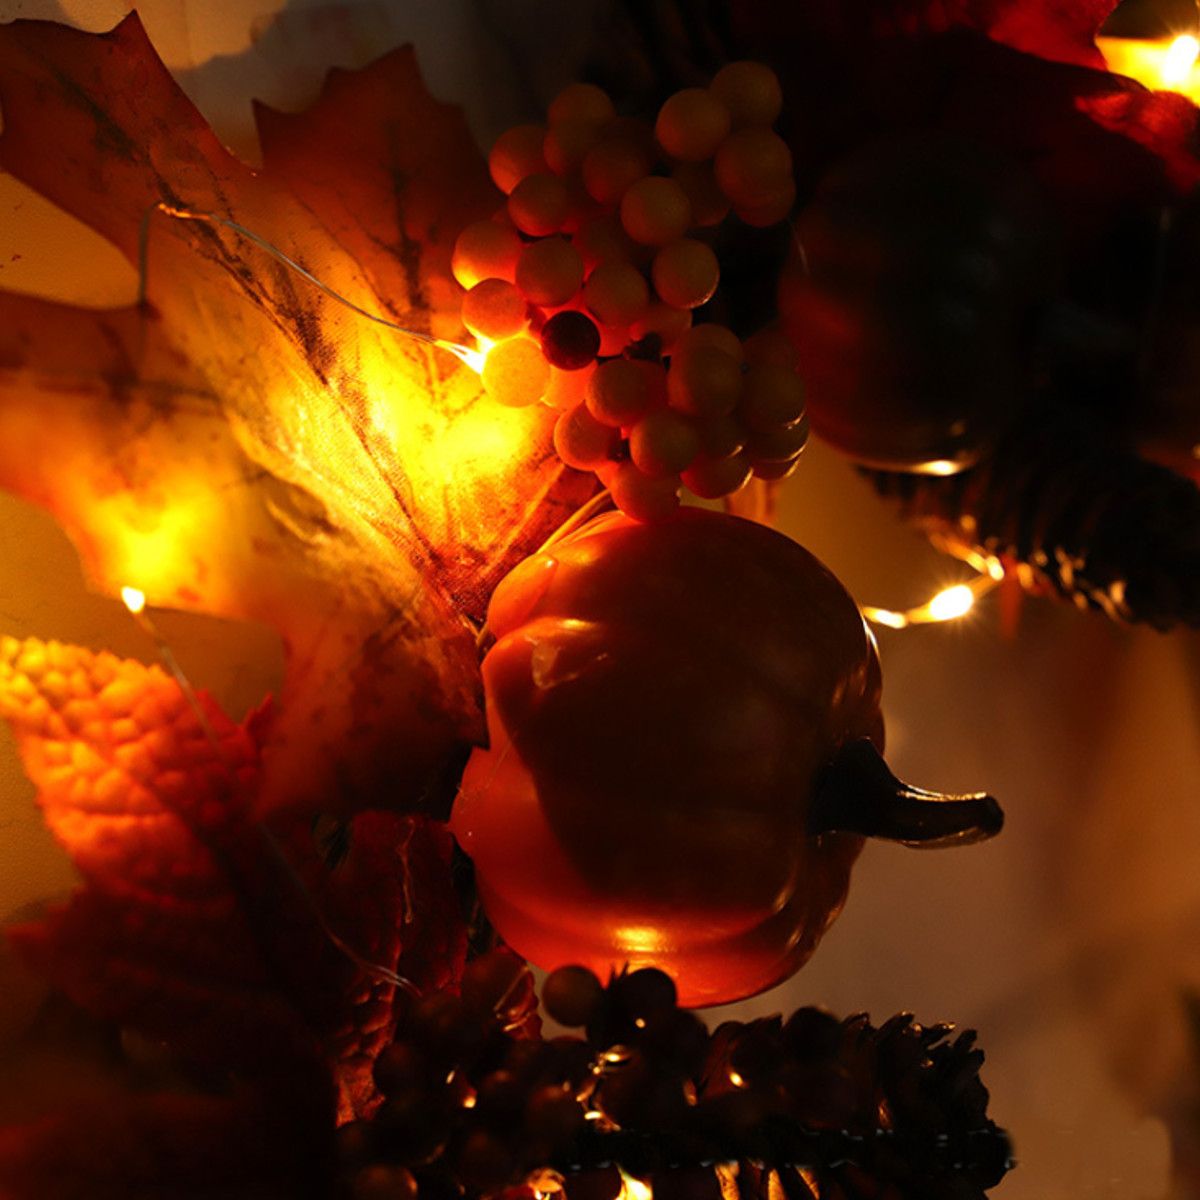 Halloween-Artificial-Pumpkin-Wreath-Autumn-Color-Harvest-Maple-Leaf-LED-Light-String-Door-Garland-De-1752873